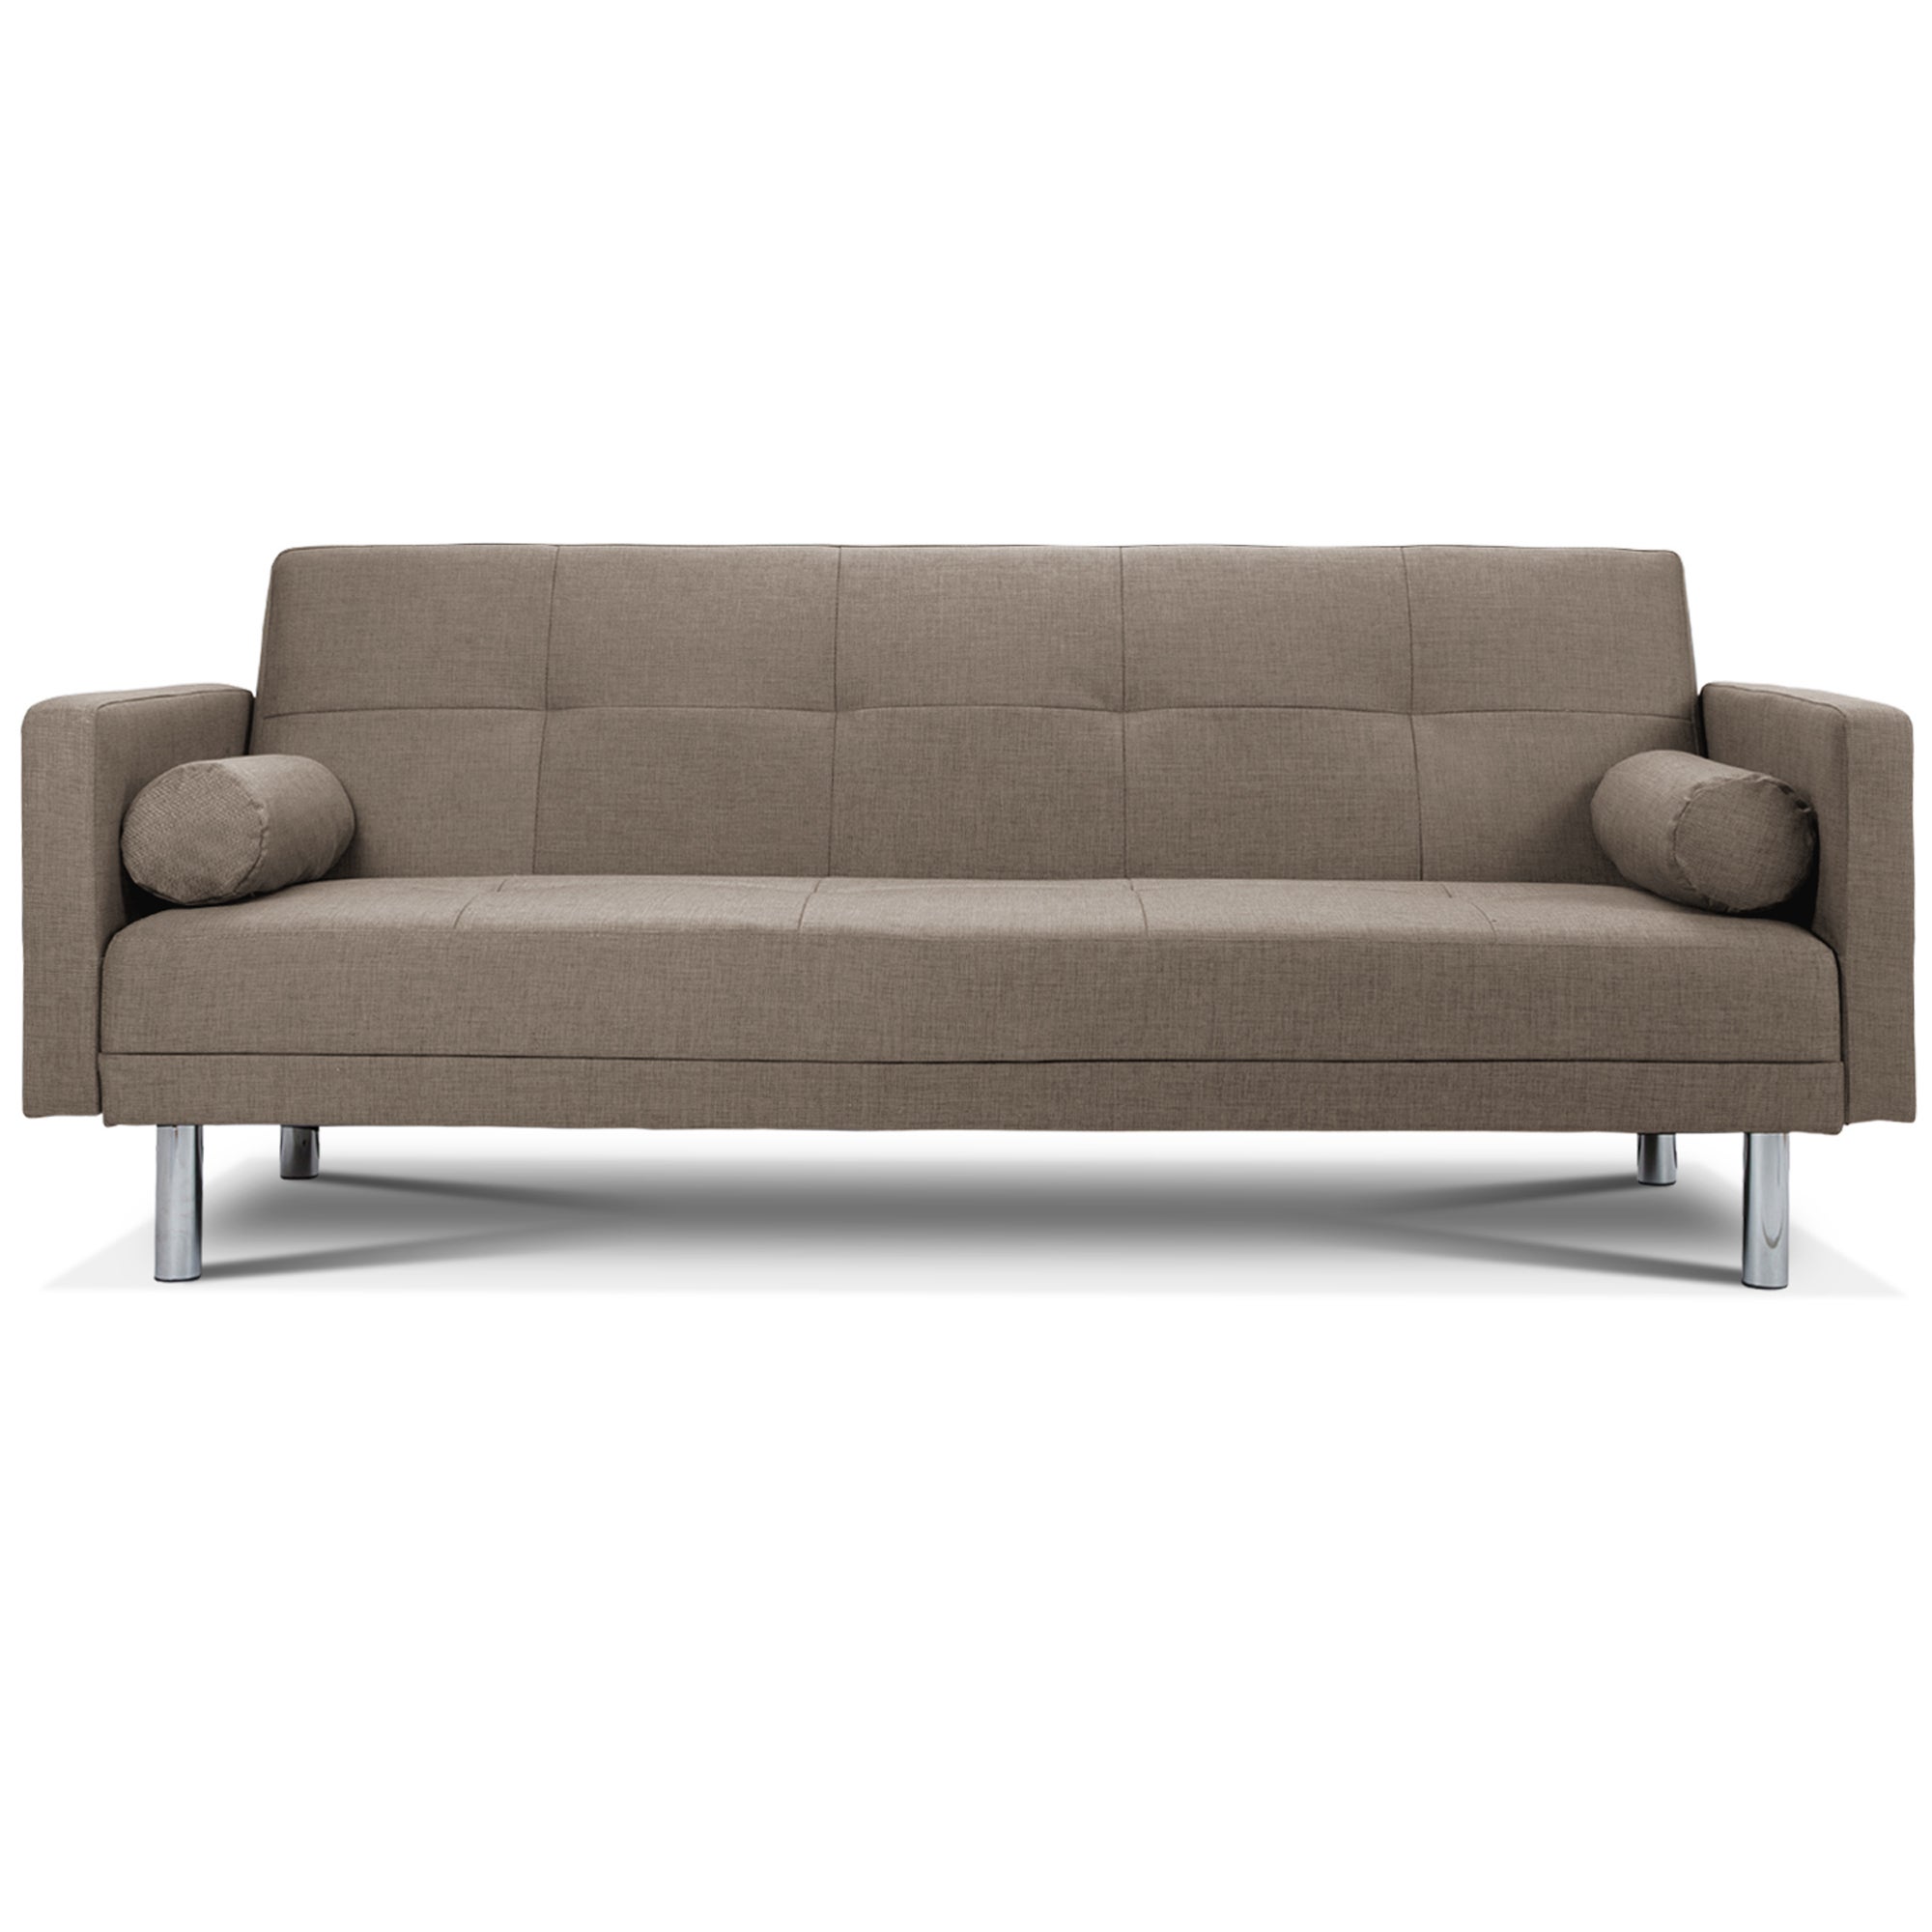 Sofa Beds | Dunelm